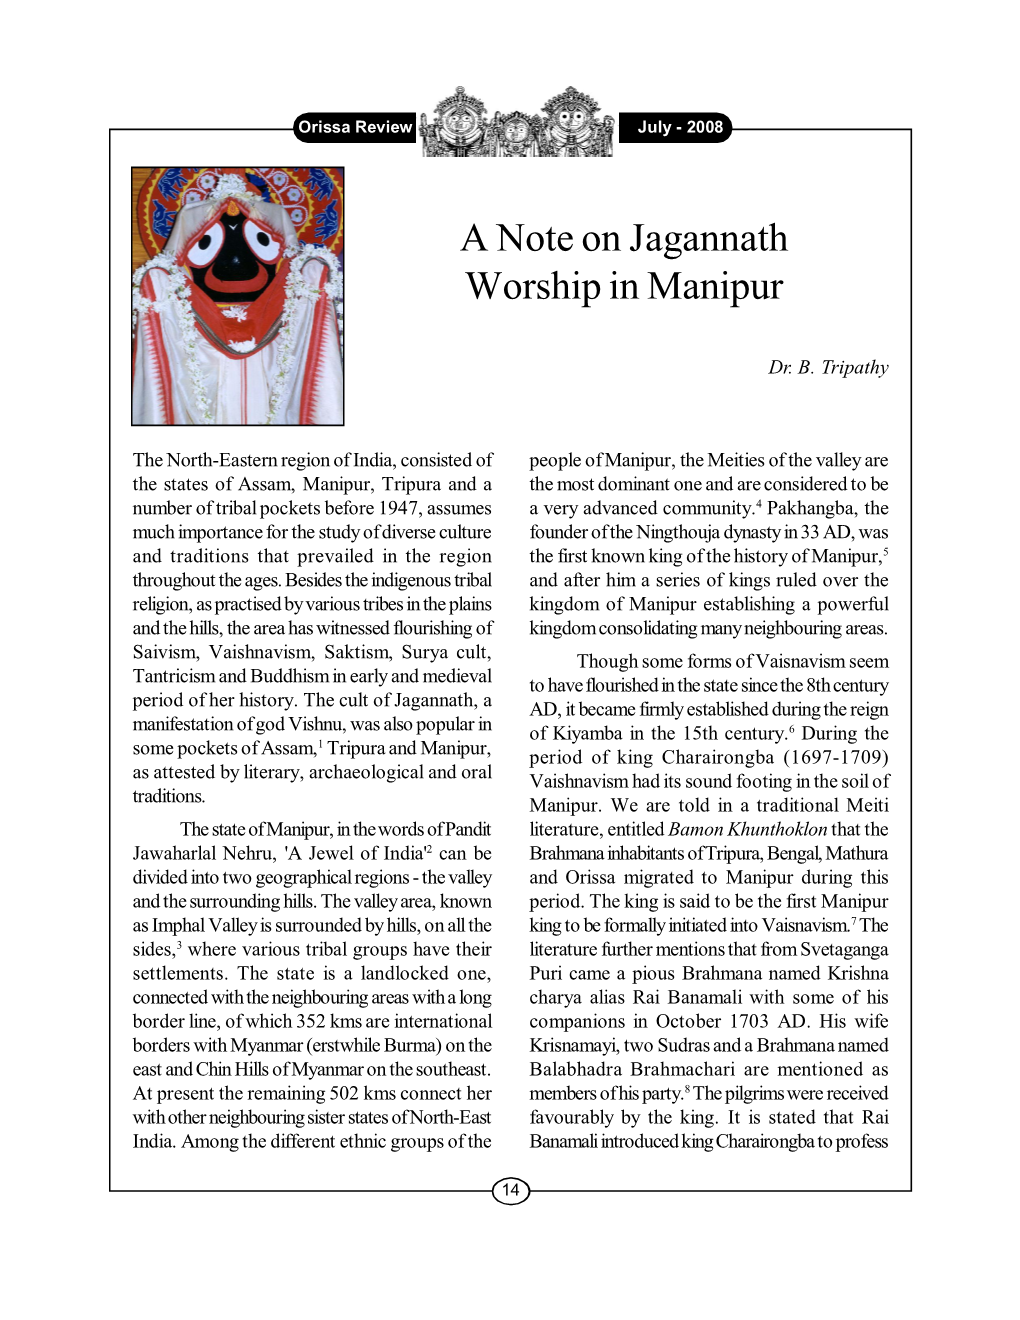 A Note on Jagannath Worship in Manipur